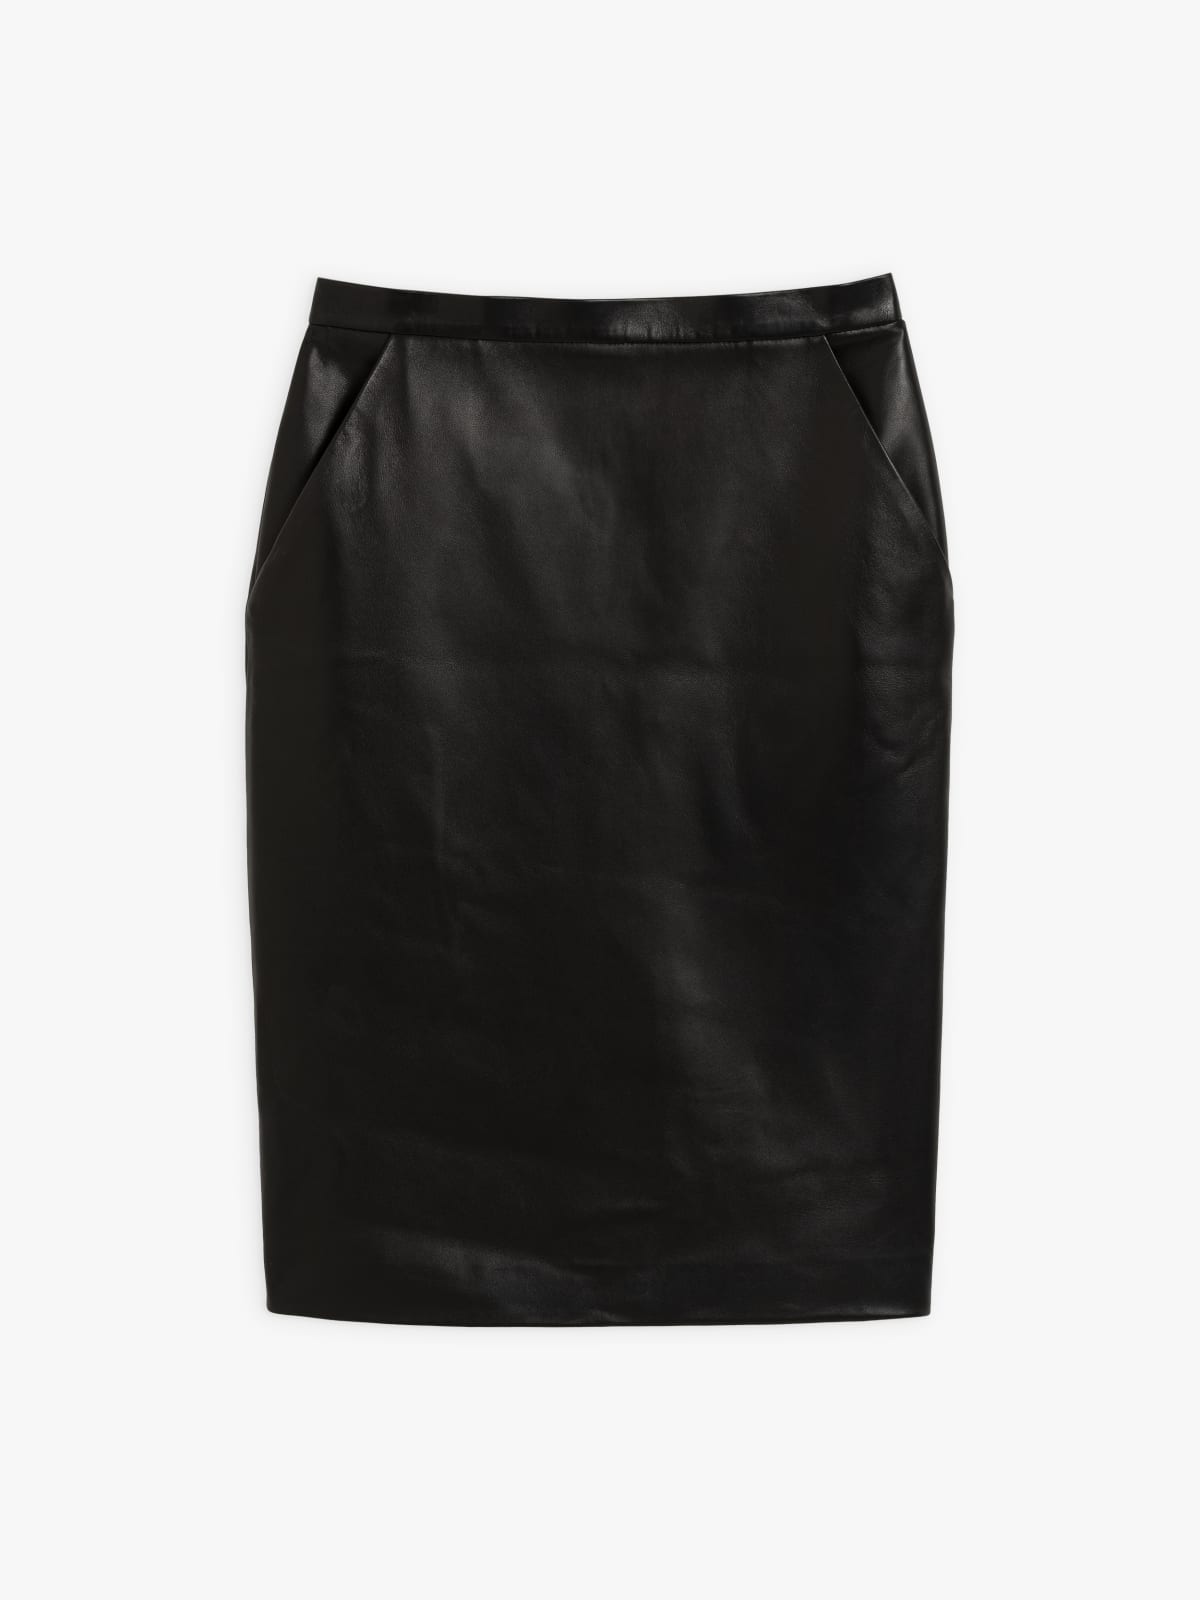 black lambskin leather skirt